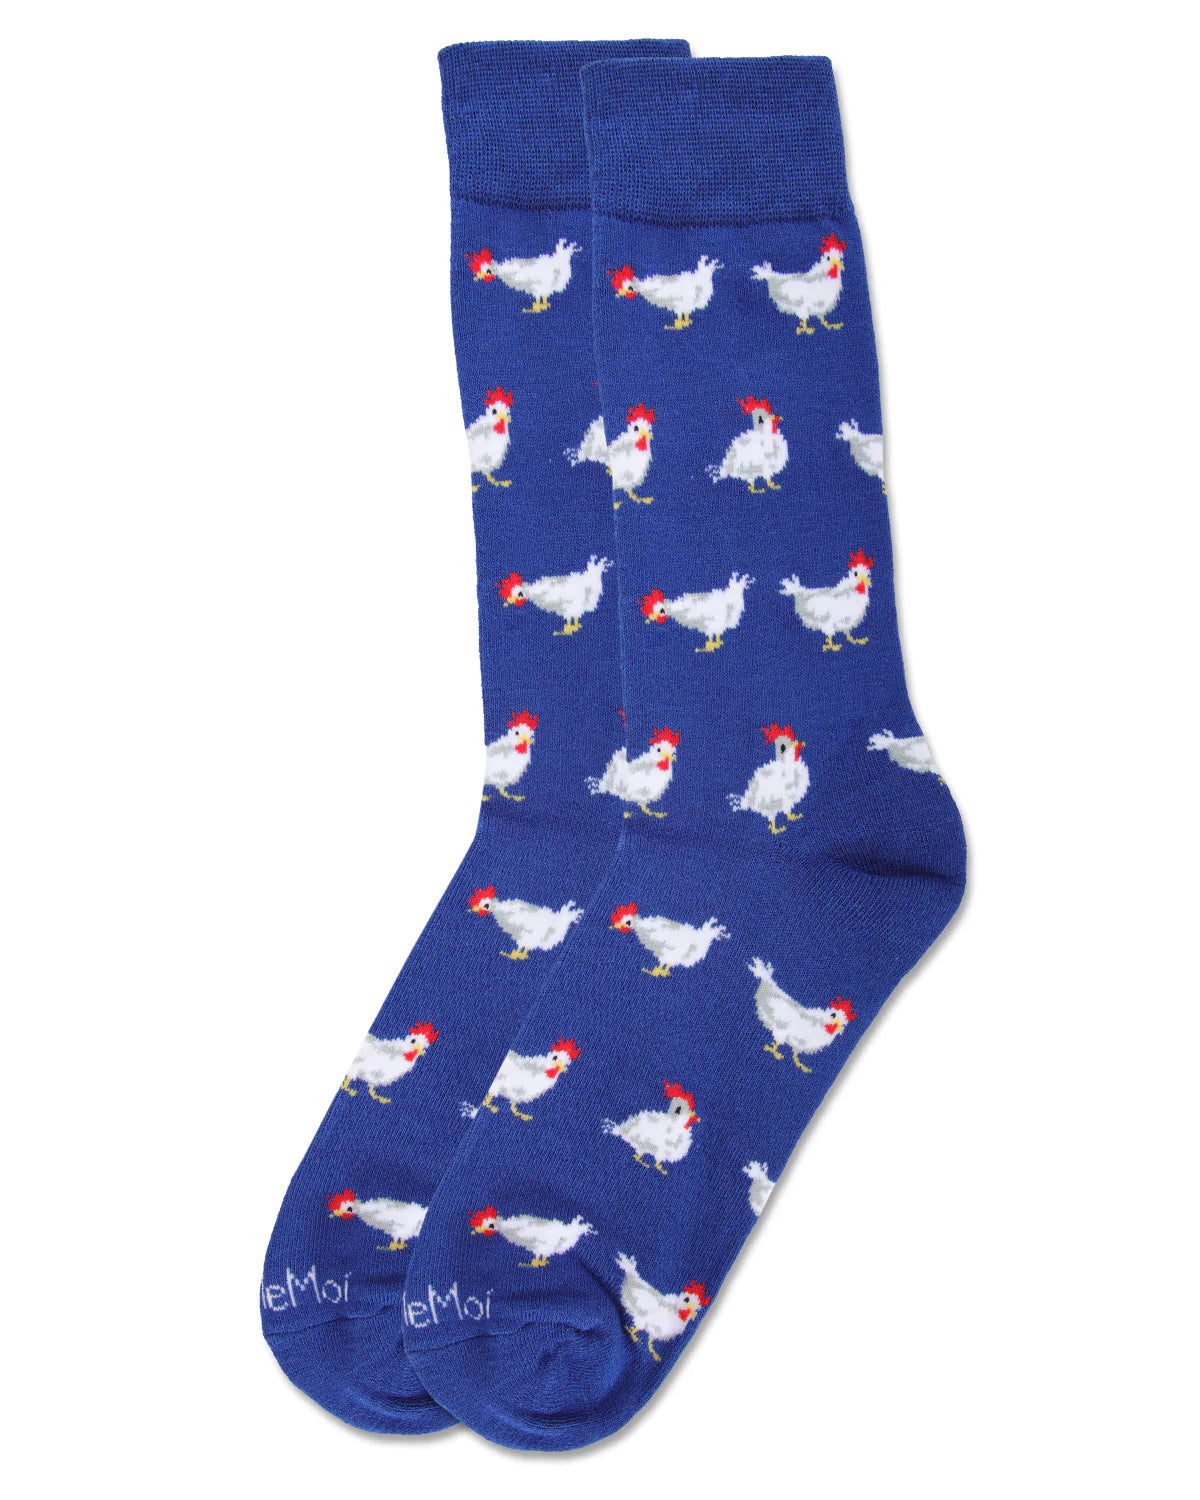 Men's Crew Socks Chickens